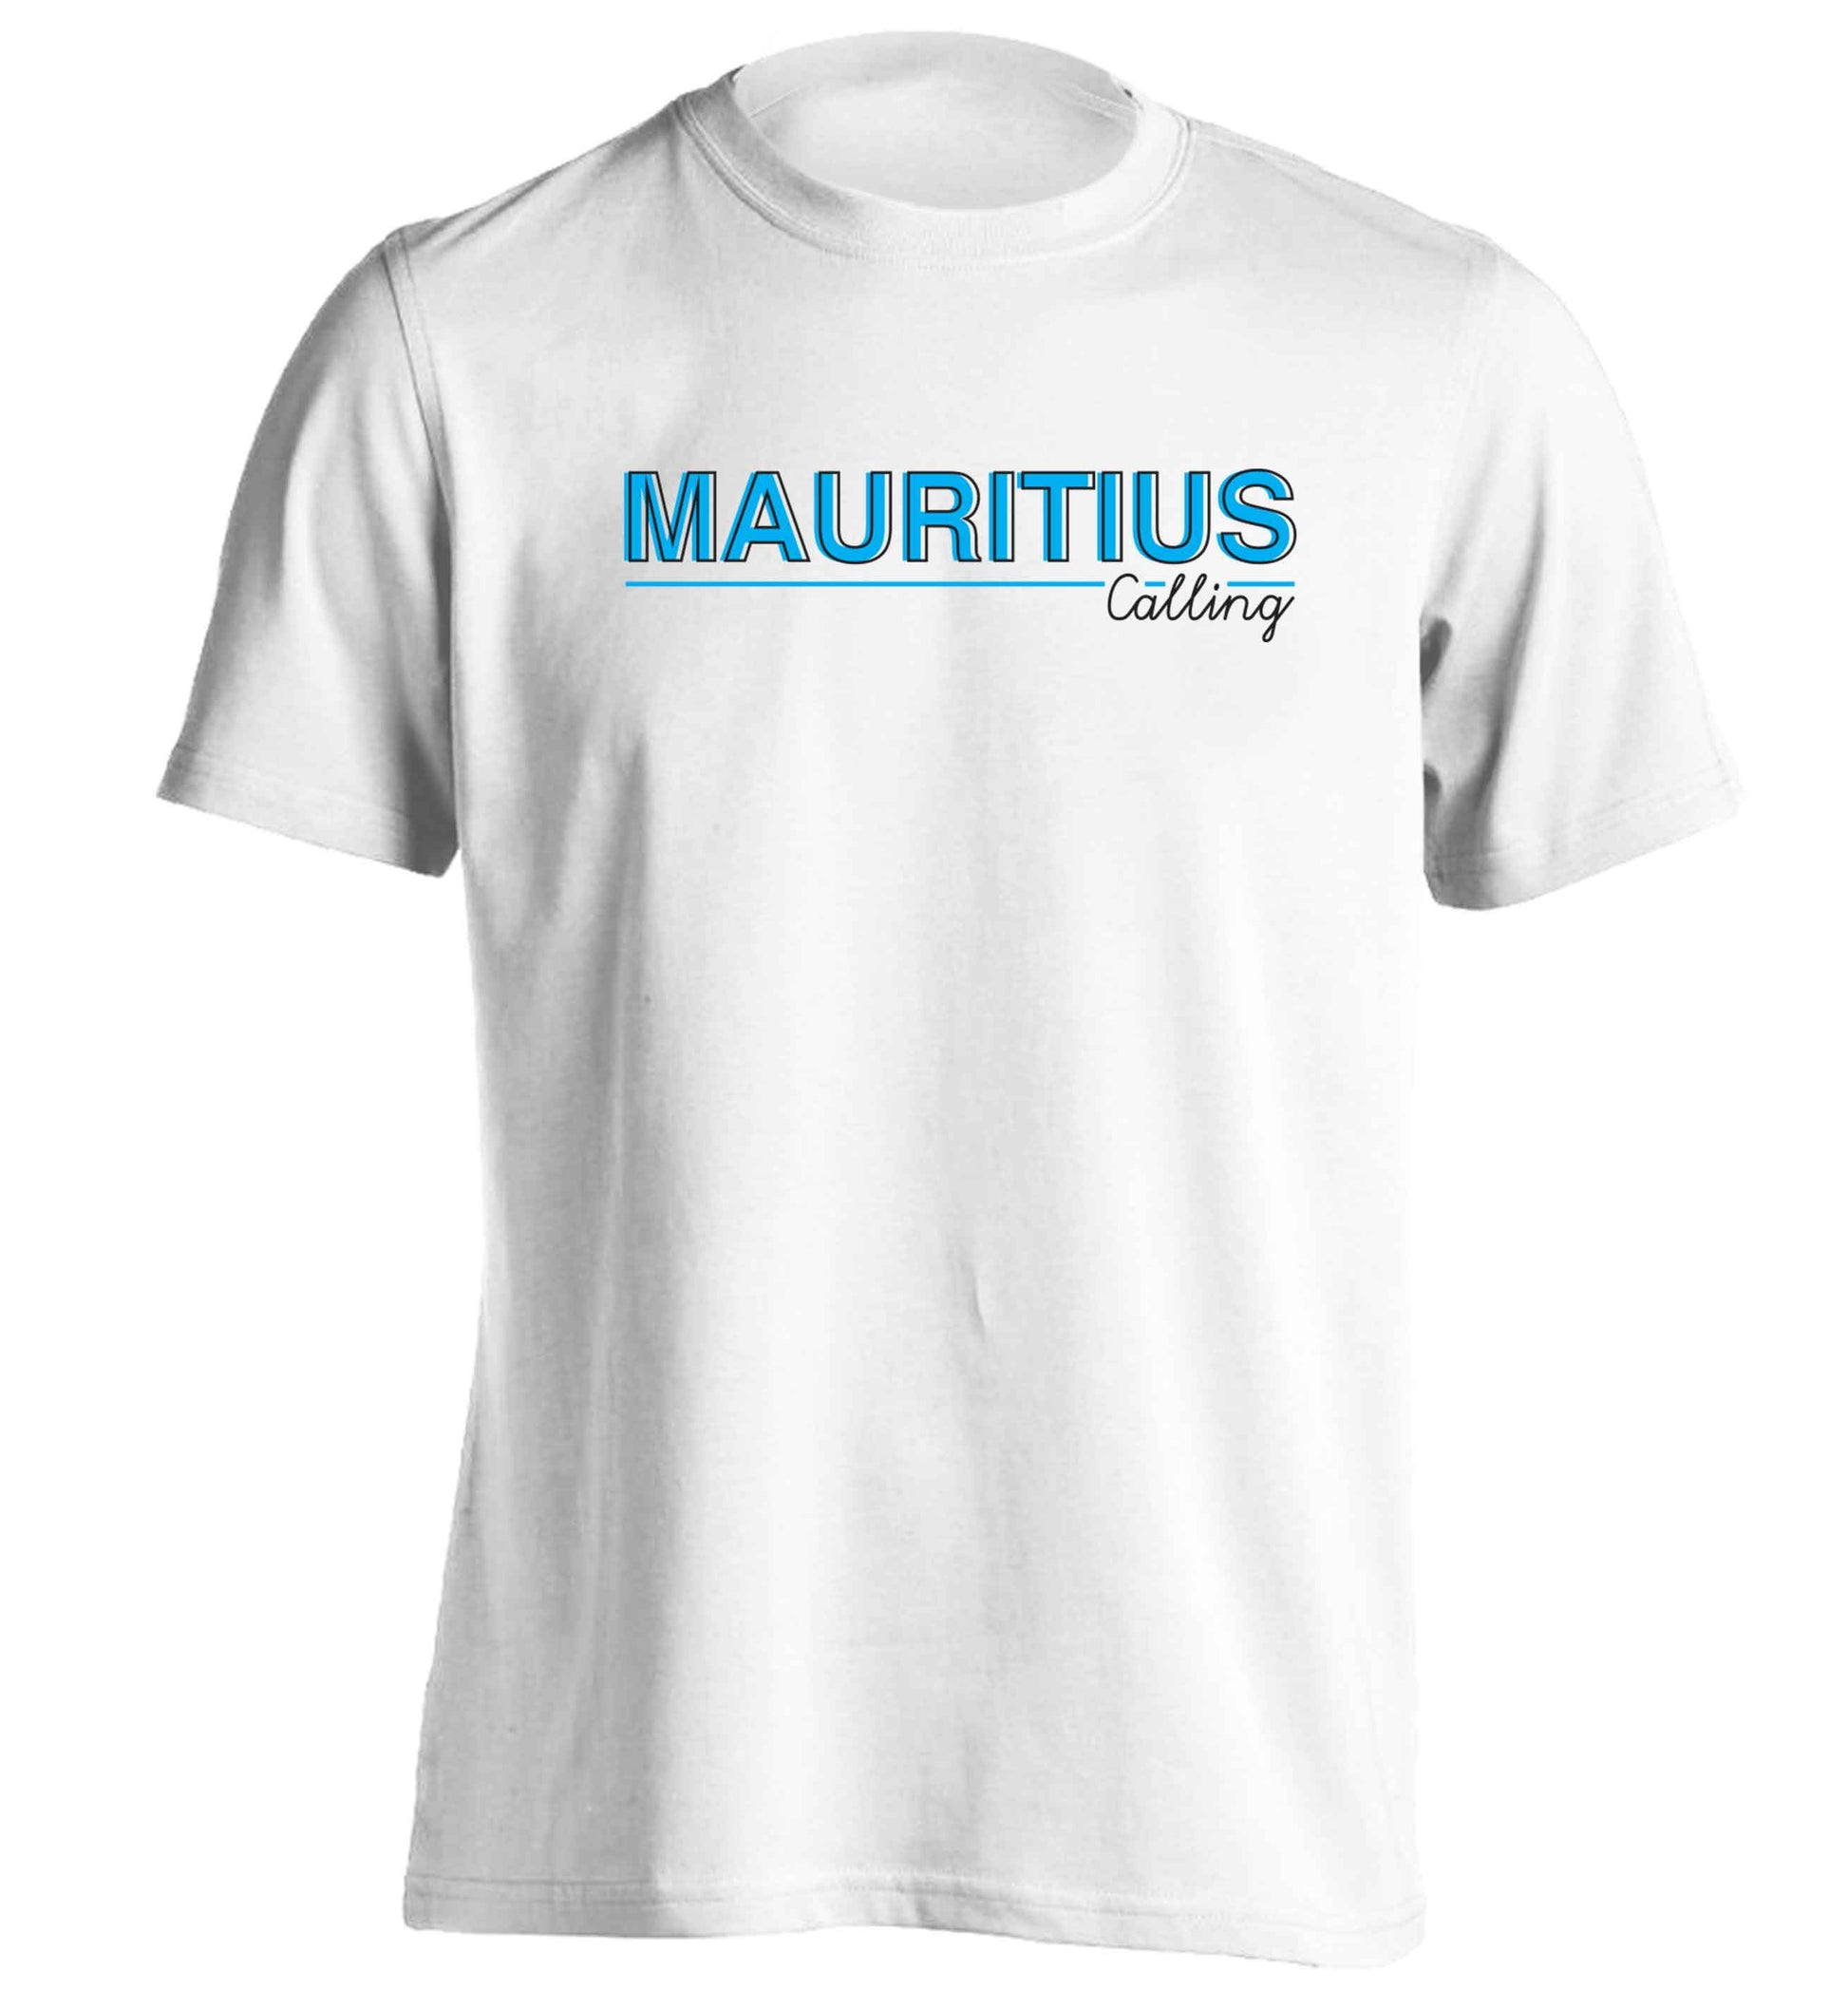 Mauritius calling adults unisex white Tshirt 2XL